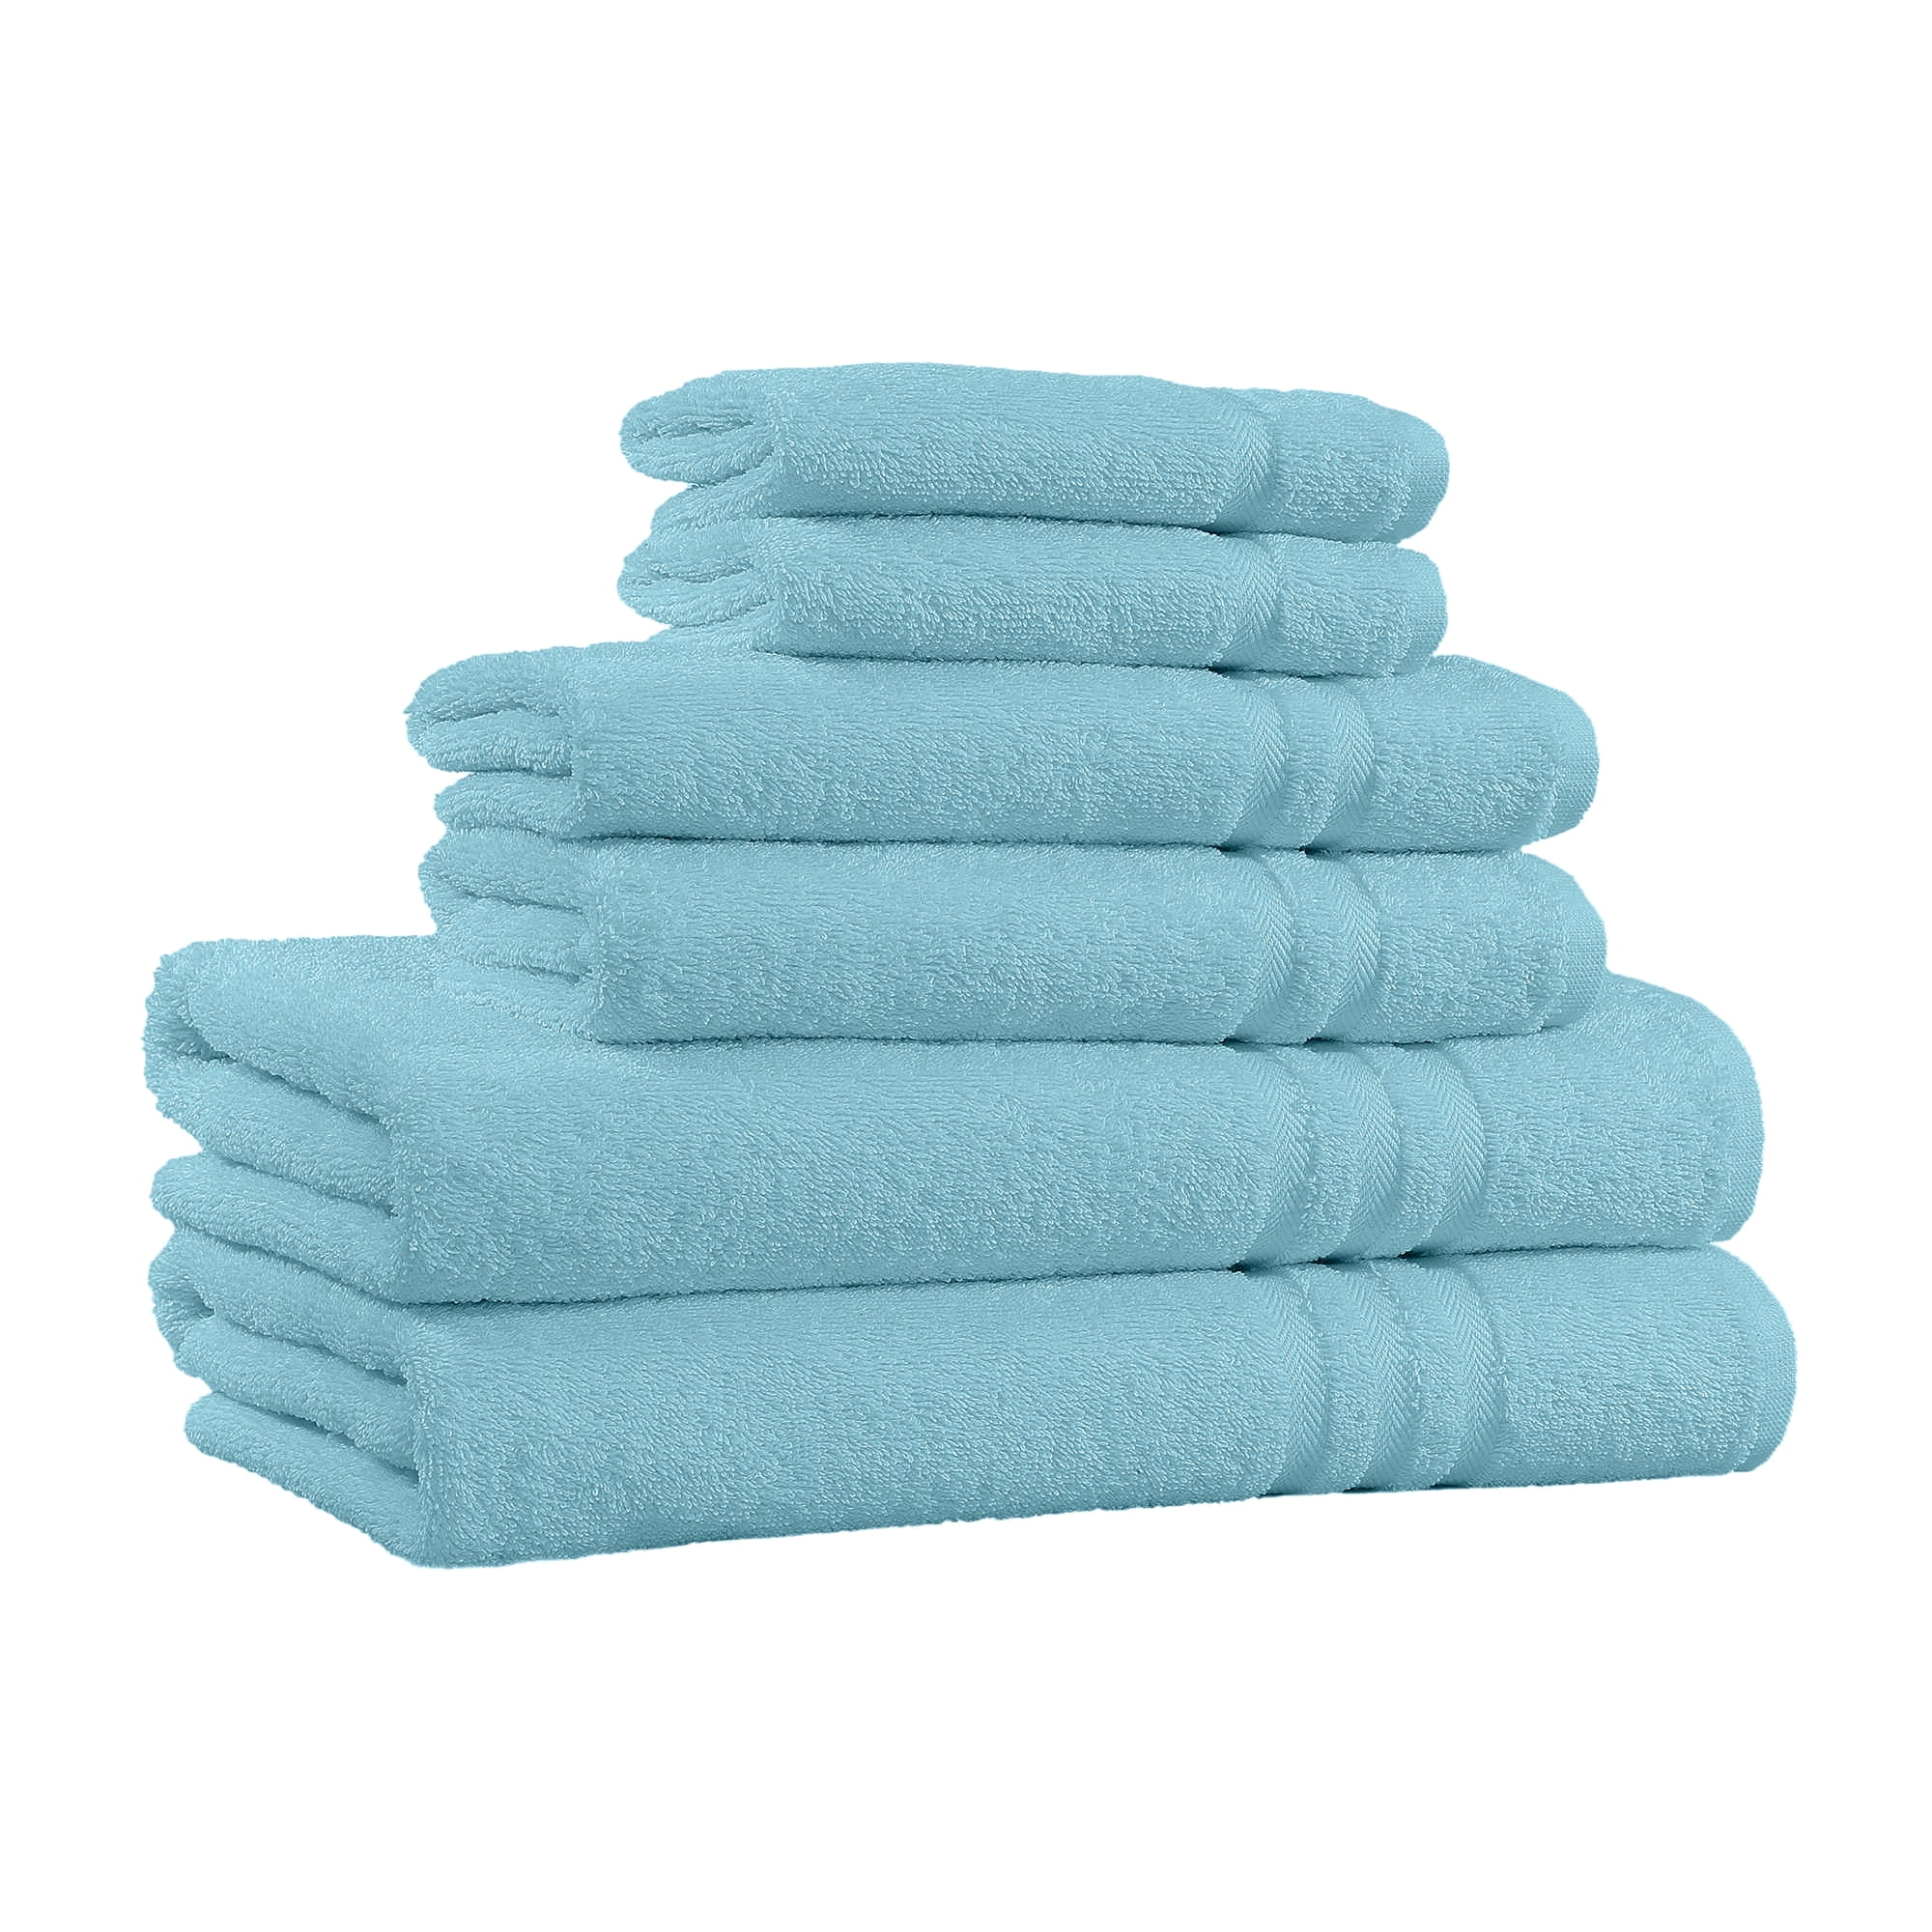 Blue and White,1 Bath Towel,600 GSM SEMAXE Striped Bath Towel Premium Bathroom Towel Highly Absorbent